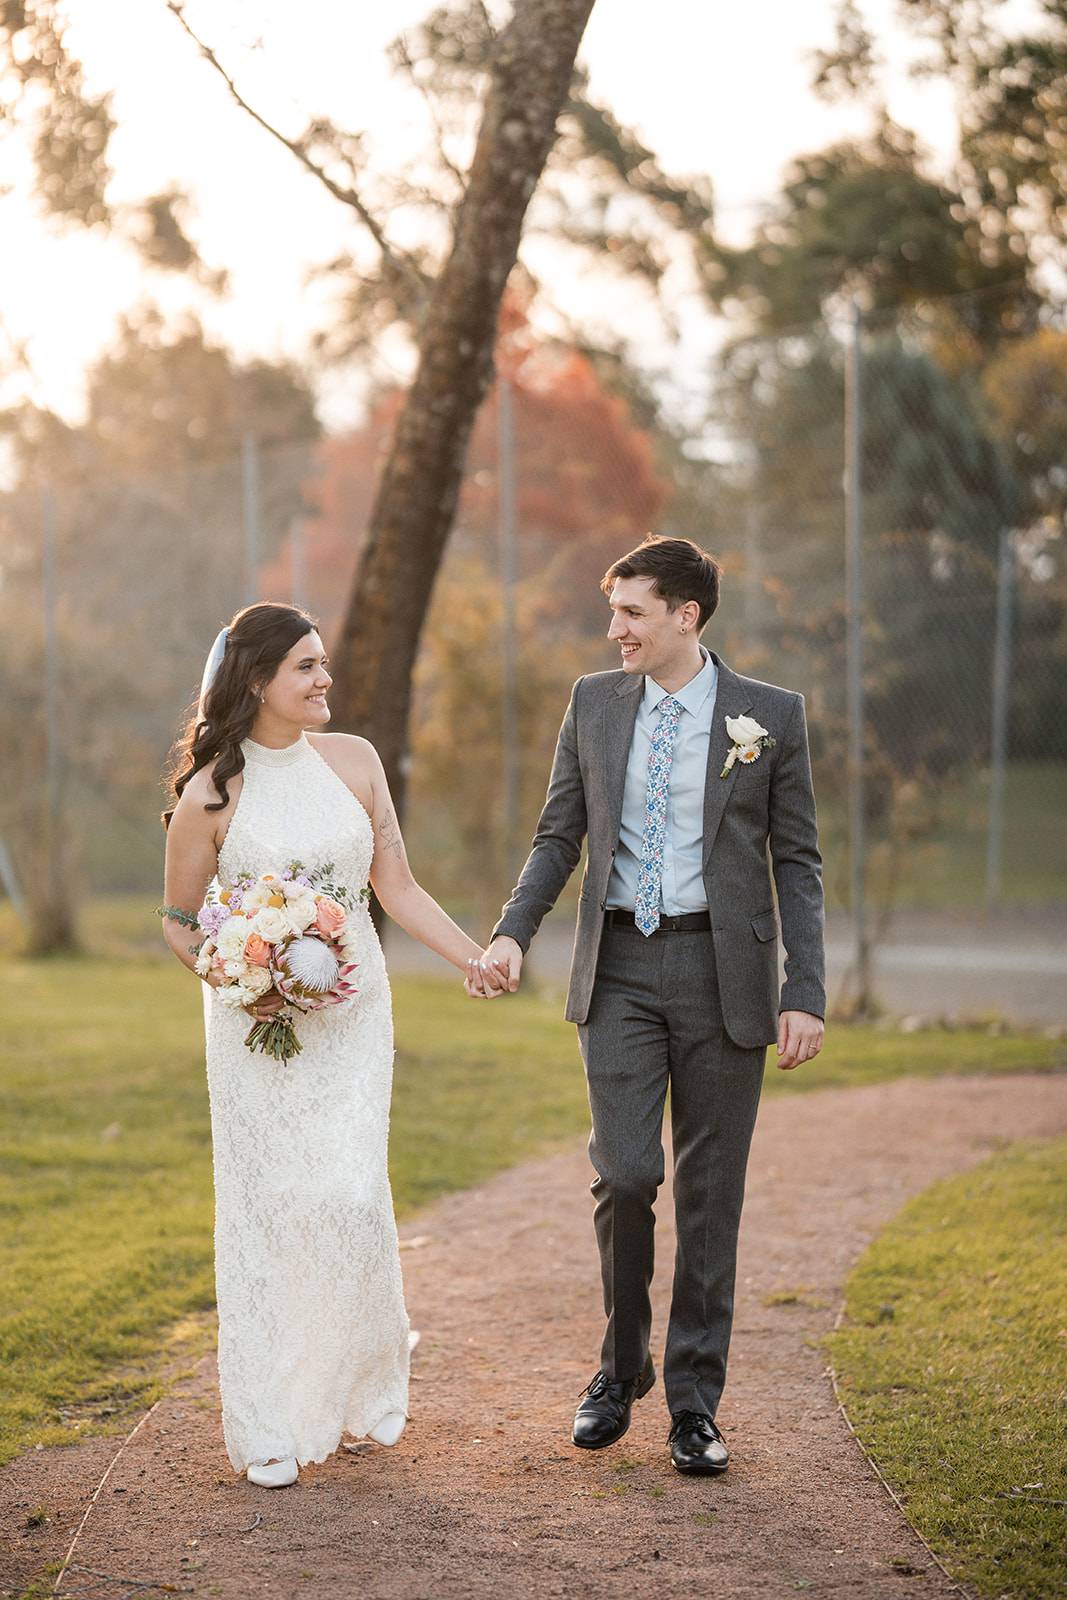 Stefanie + Patrick // Briars Conservatory // Wedding Photographer Southern Highlands